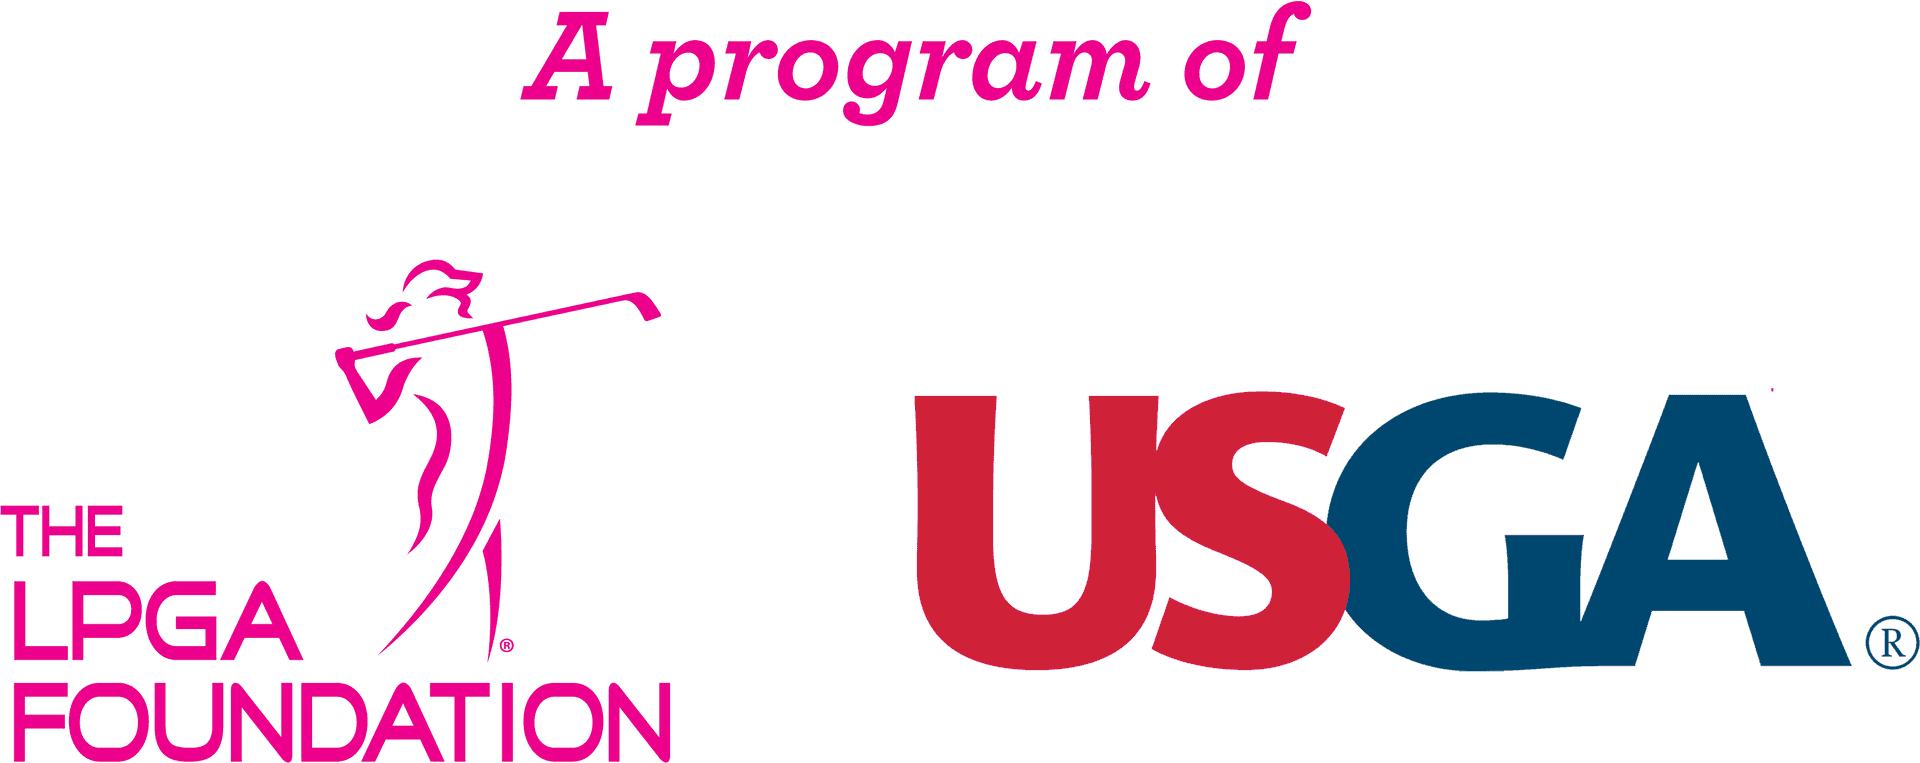 L P G A Foundation U S G A Program Logo PNG image